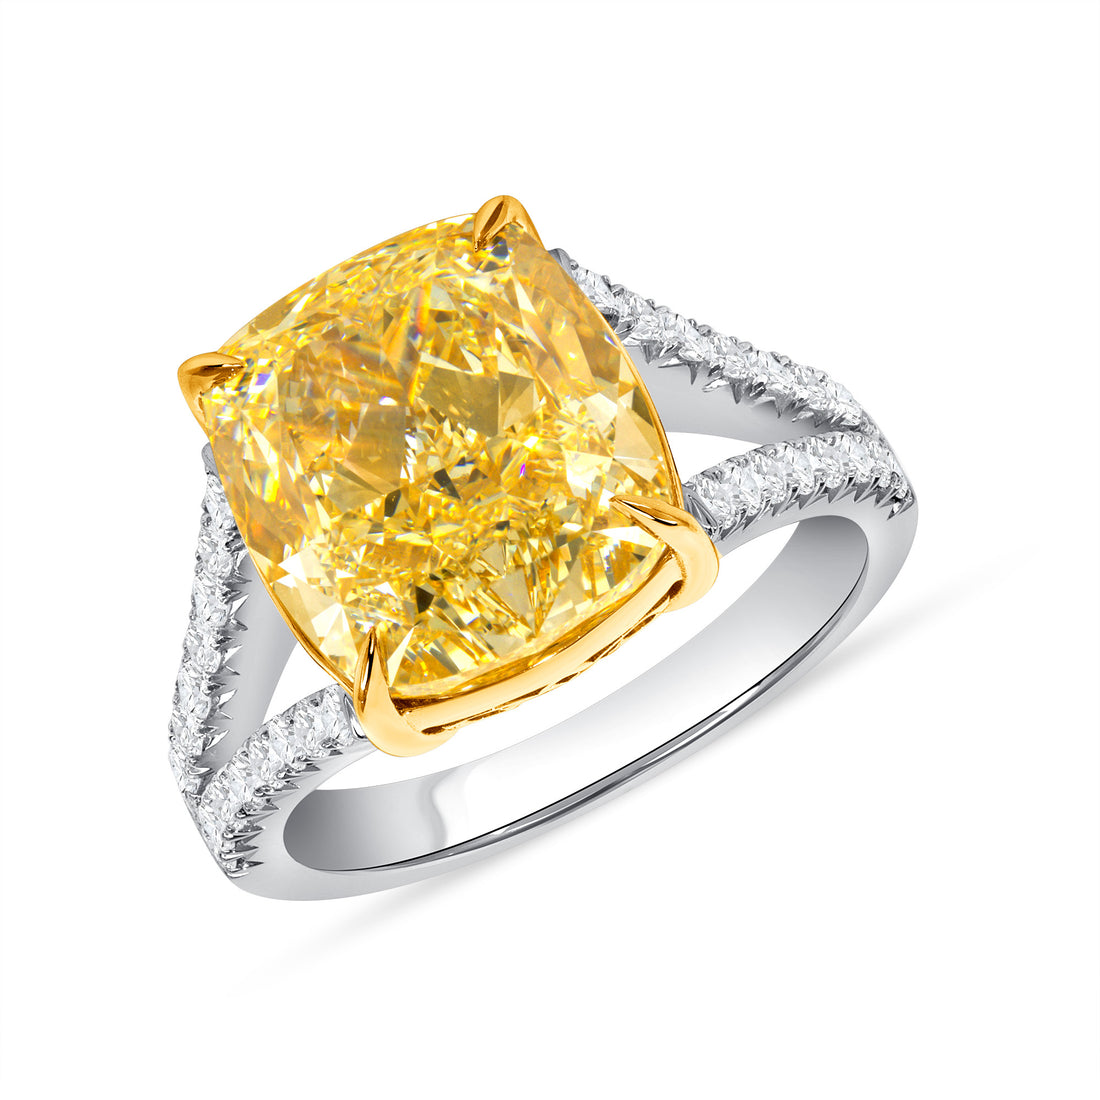 8.36 CT. Cushion Yellow Diamond and Round Brilliant Diamond Ring in 18K Yellow Gold and Platinum